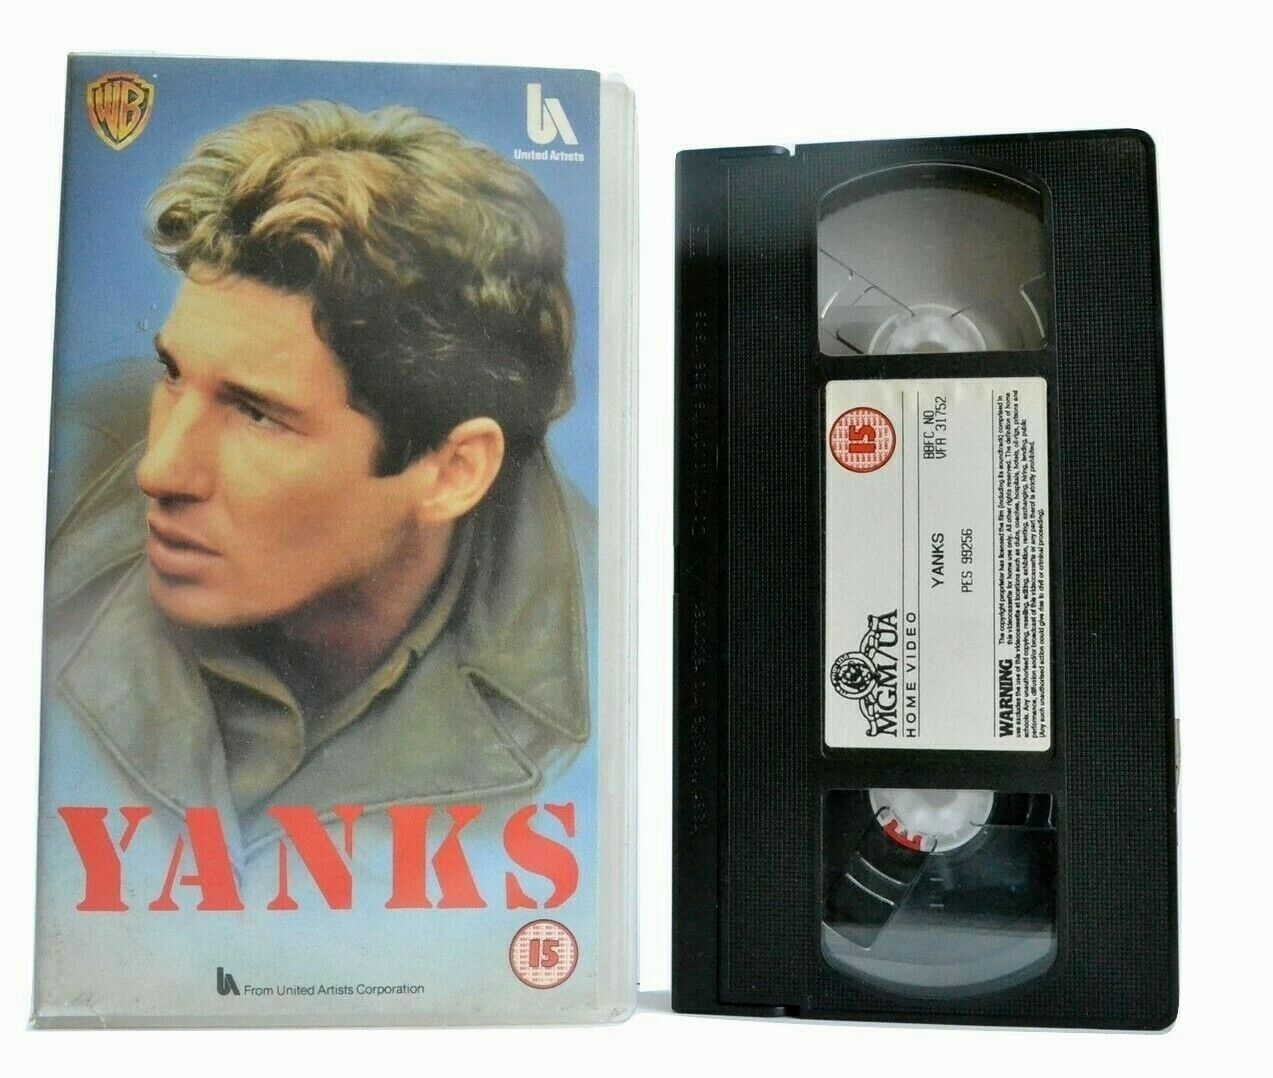 Yanks (1979) - Drama - Second World War - Northern England - Richard Gere - VHS-